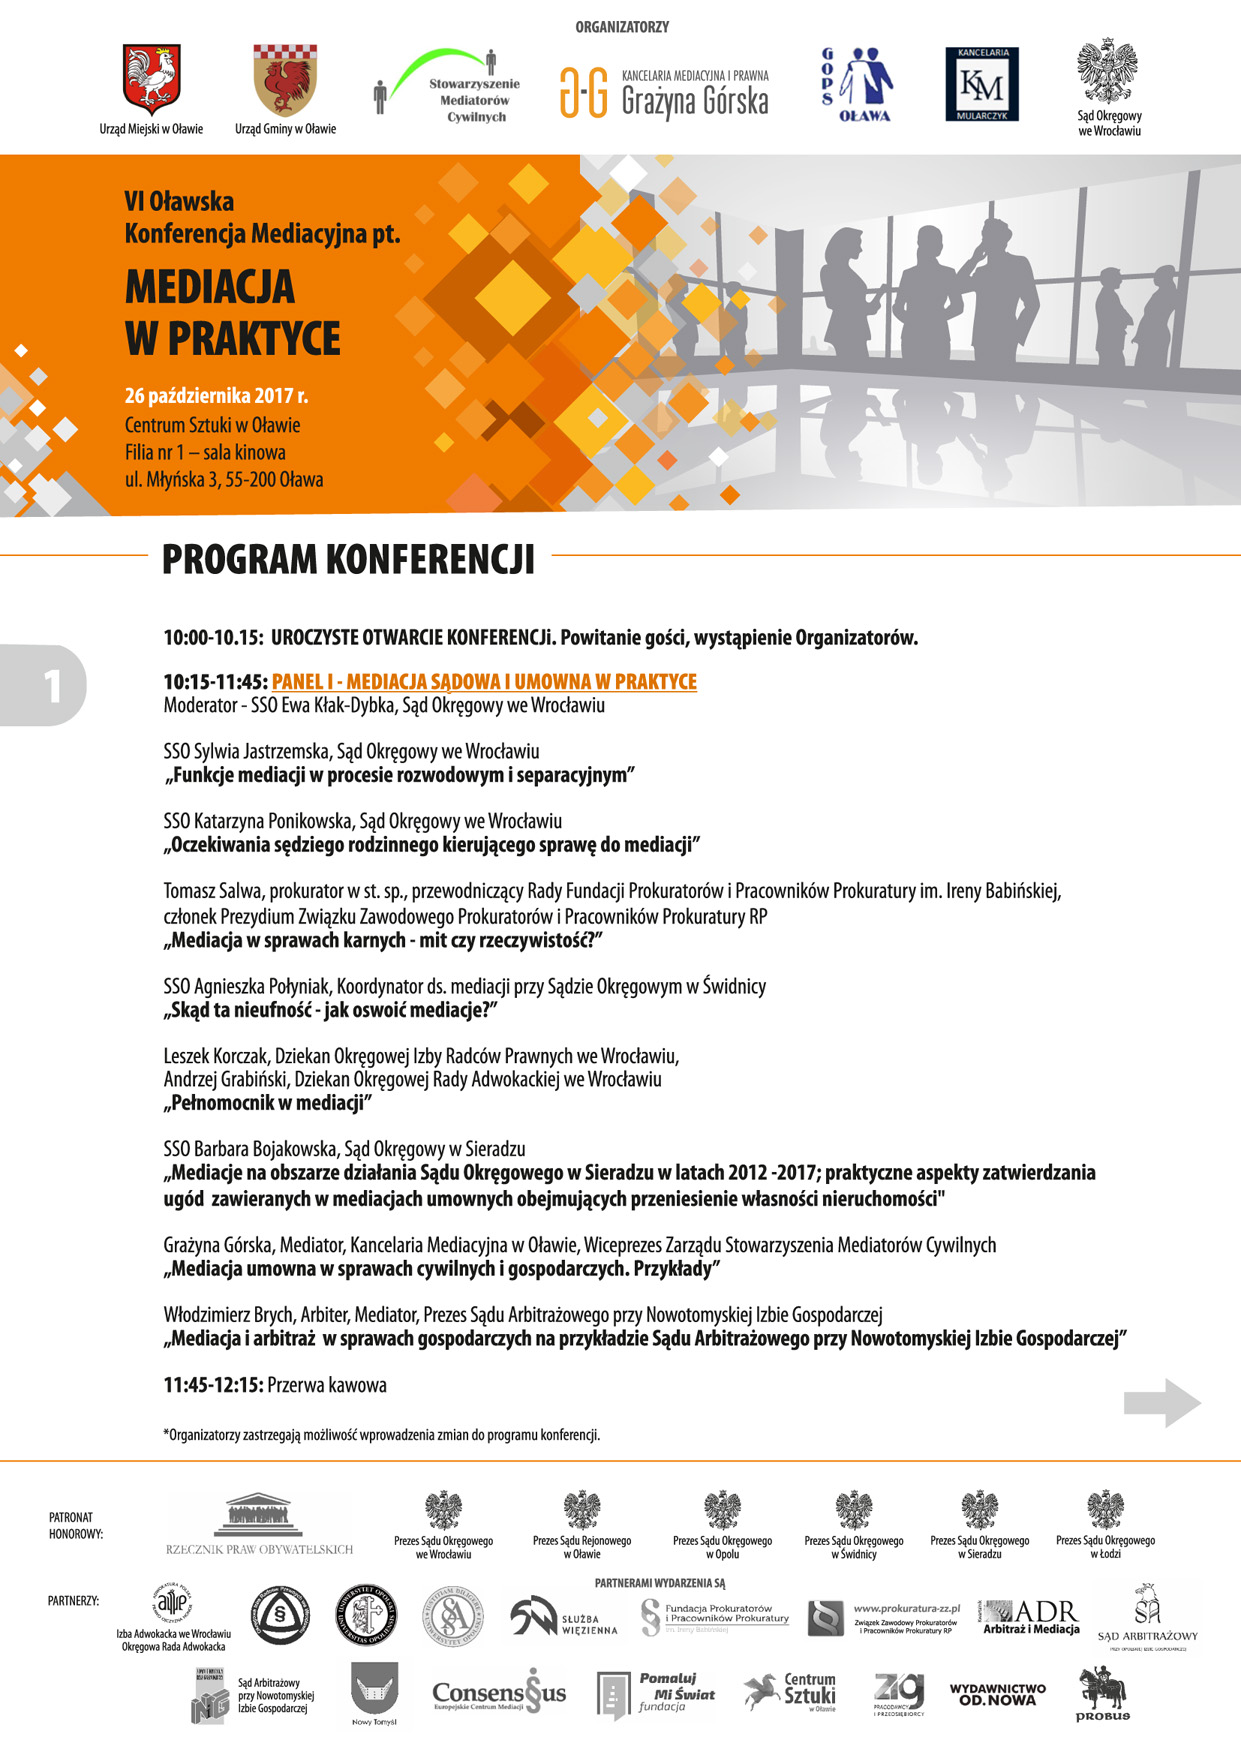 KonferencjaOlawa2017-program-mail-1.jpg